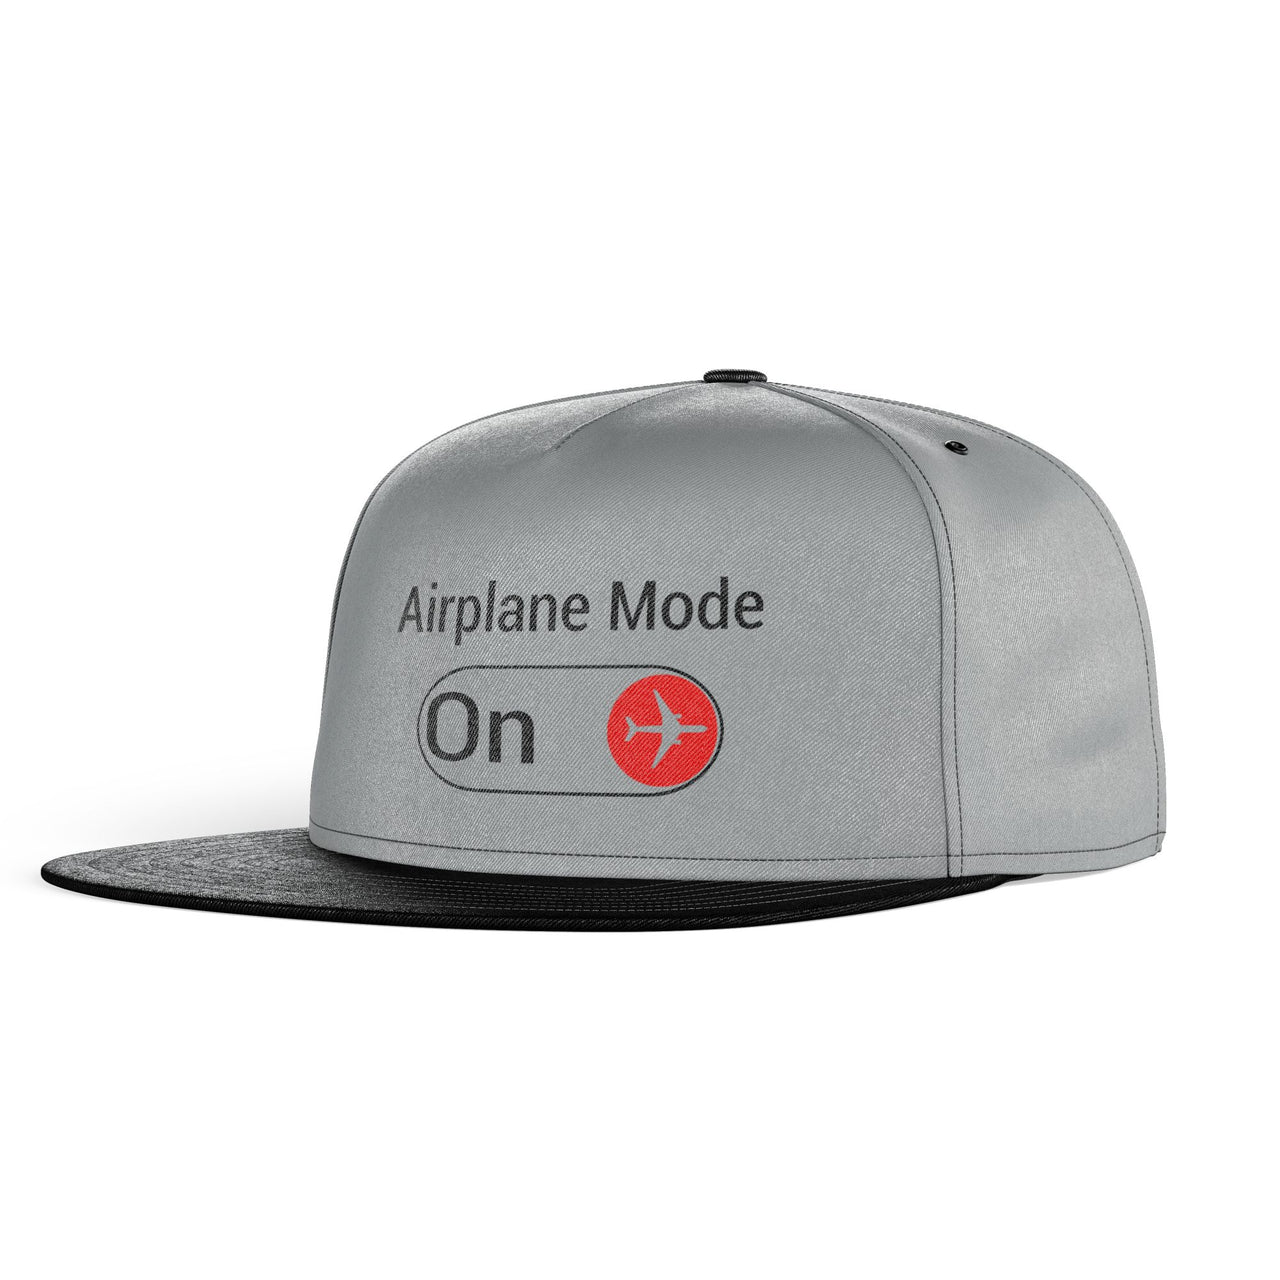 Airplane Mode On Designed Snapback Caps & Hats